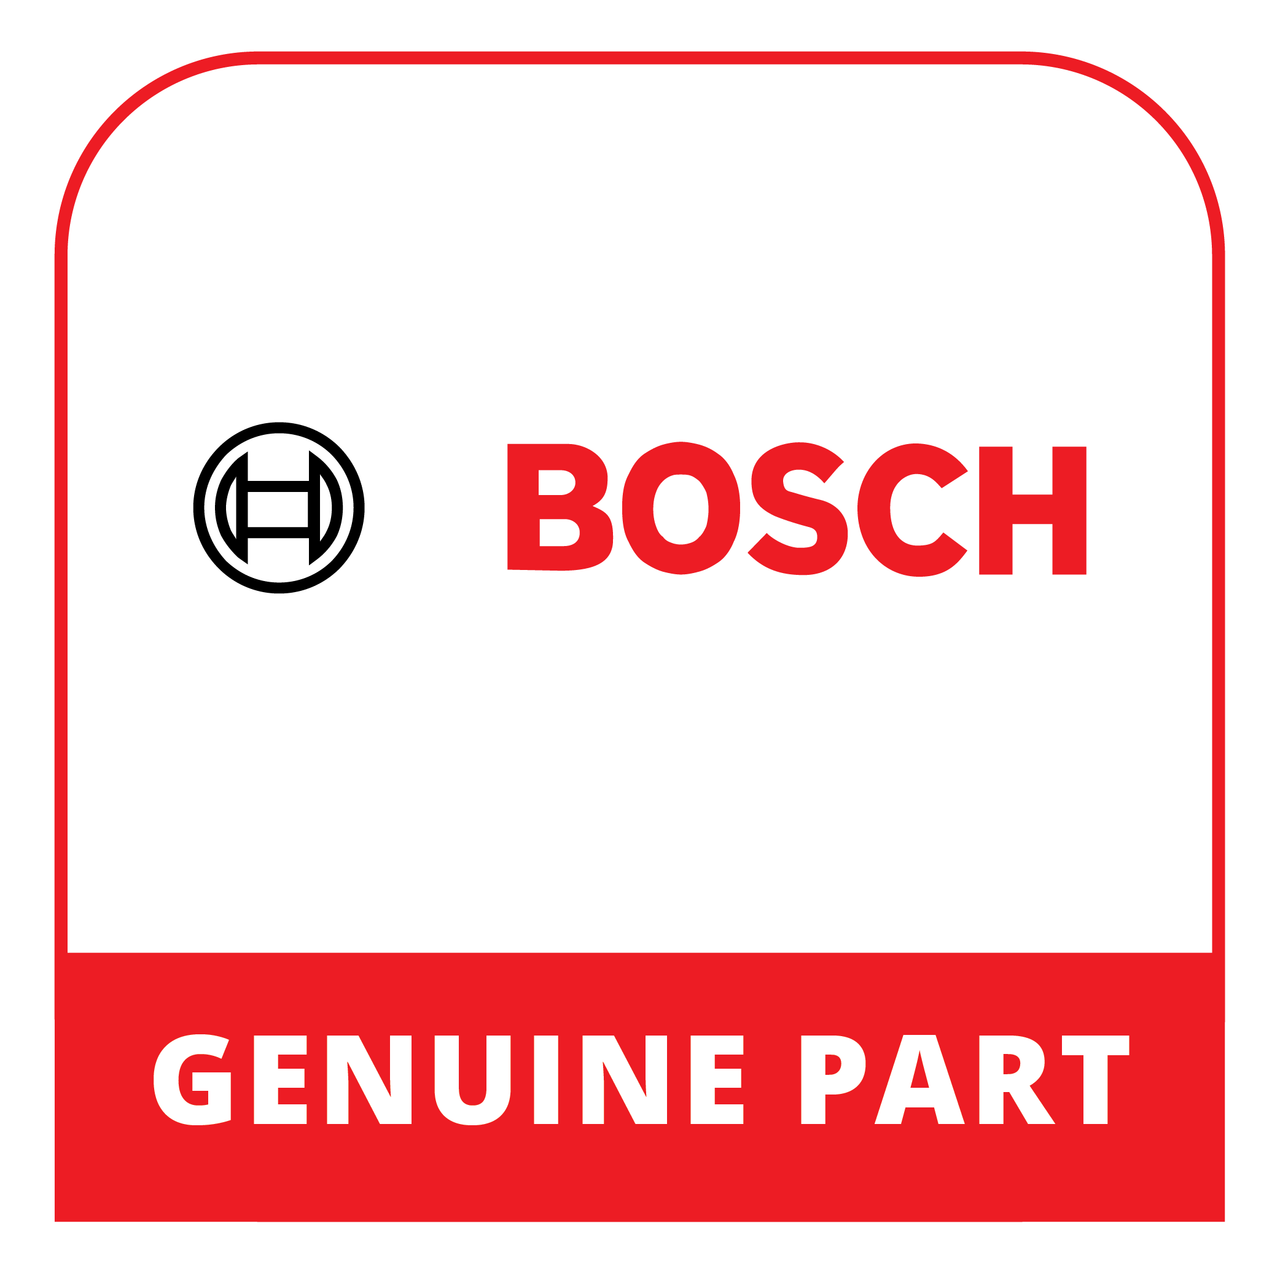 Bosch (Thermador) 10028575 - Smm Programmed - Genuine Bosch (Thermador) Part